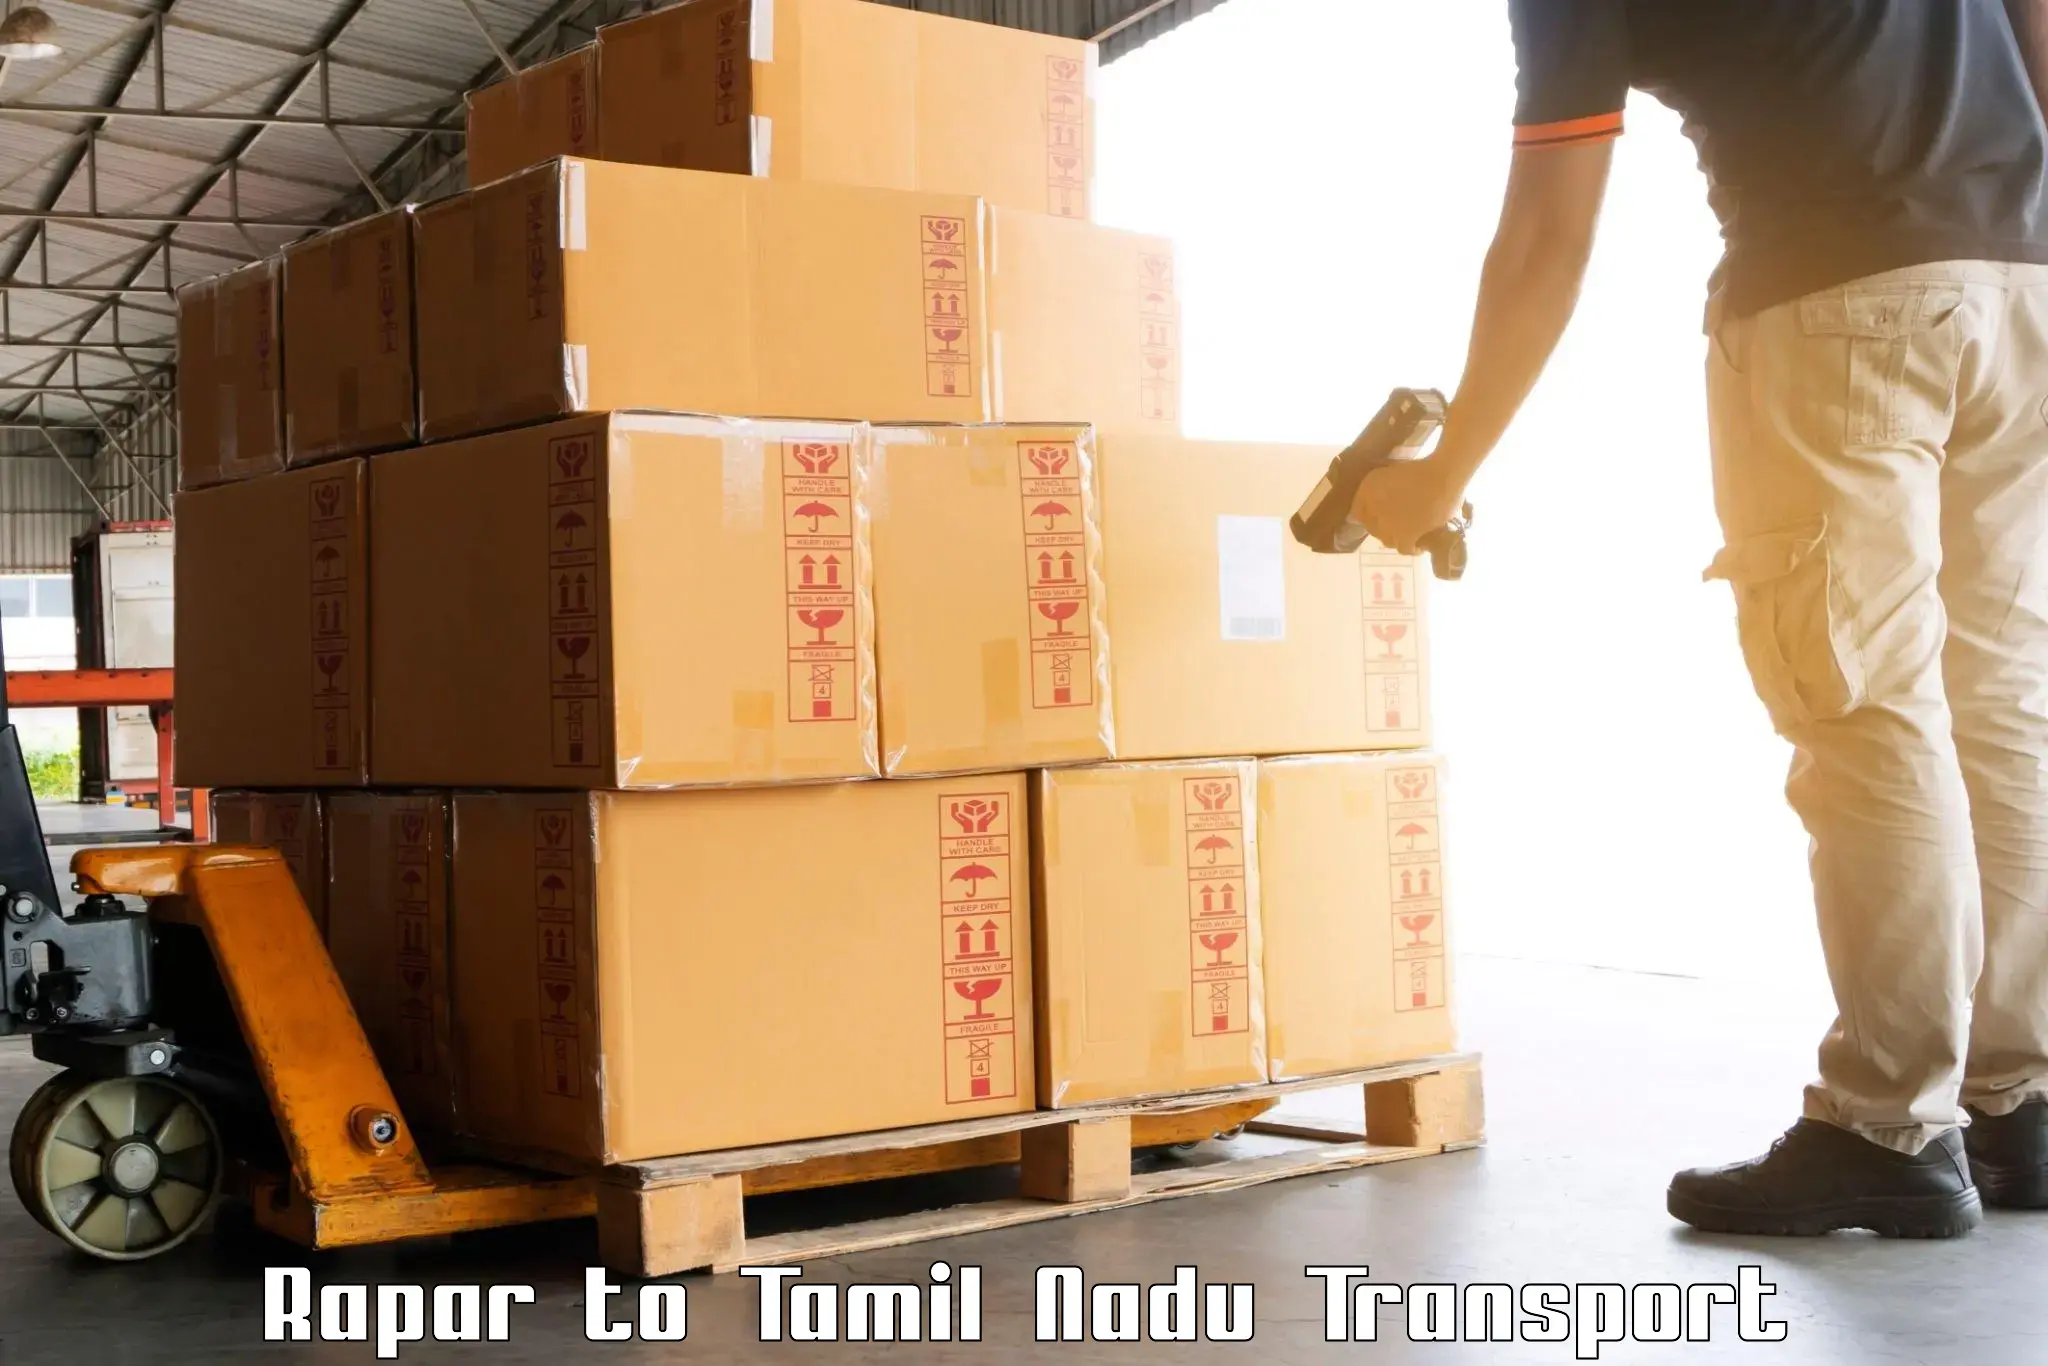 Shipping partner Rapar to Tirukalukundram